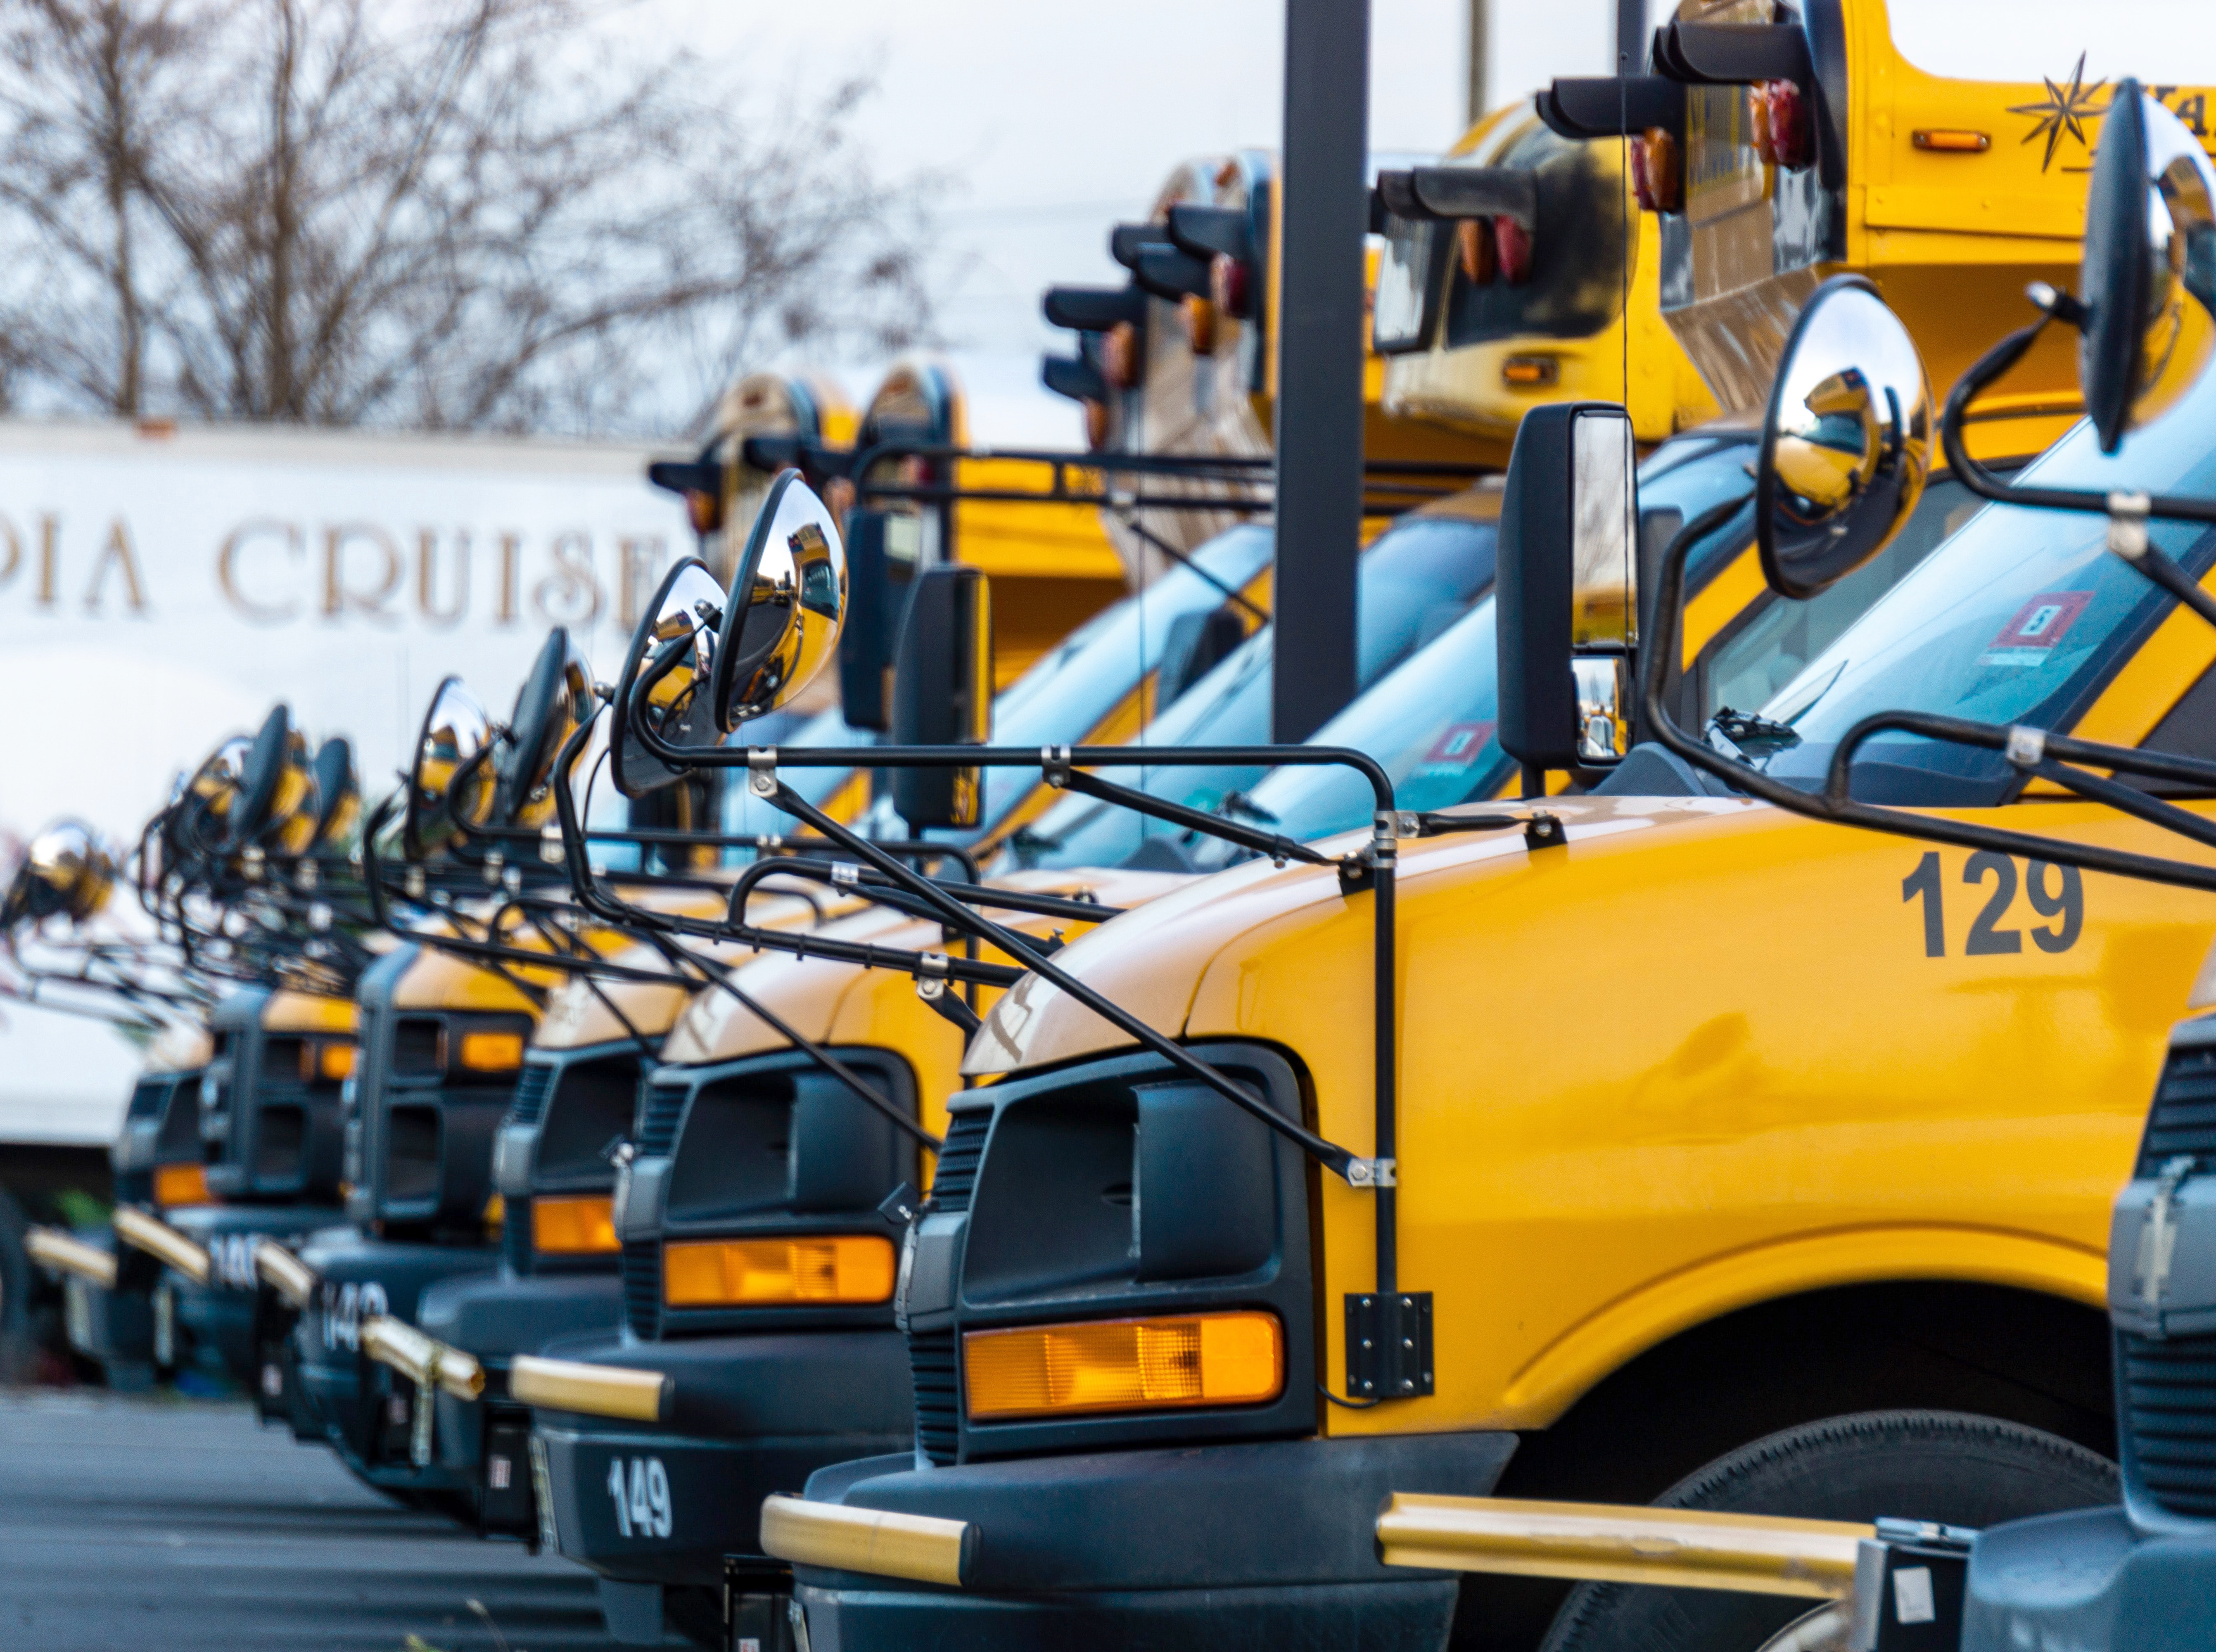 K12 stockphoto row of school buses